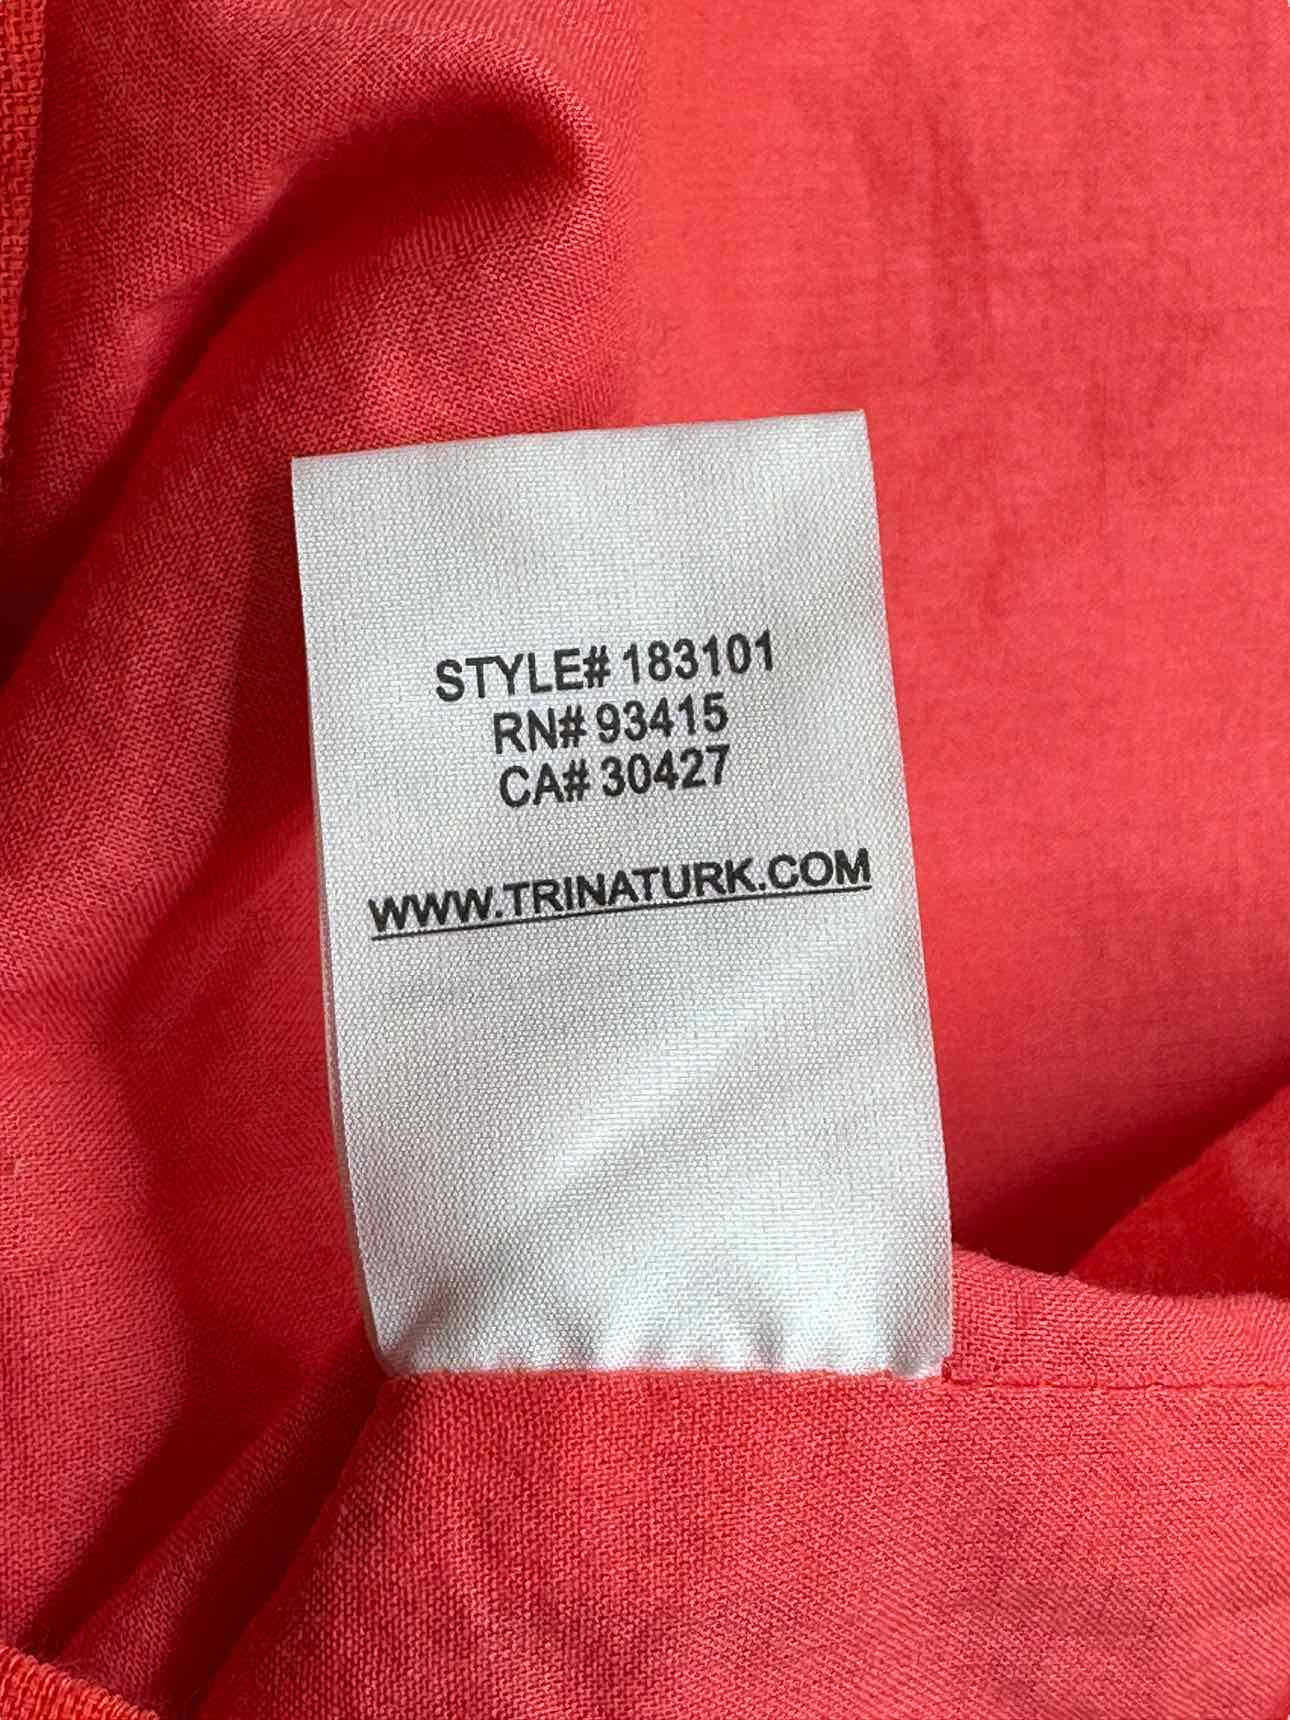 TRINA TURK Orange 100% Cotton Smocked Top Size XS